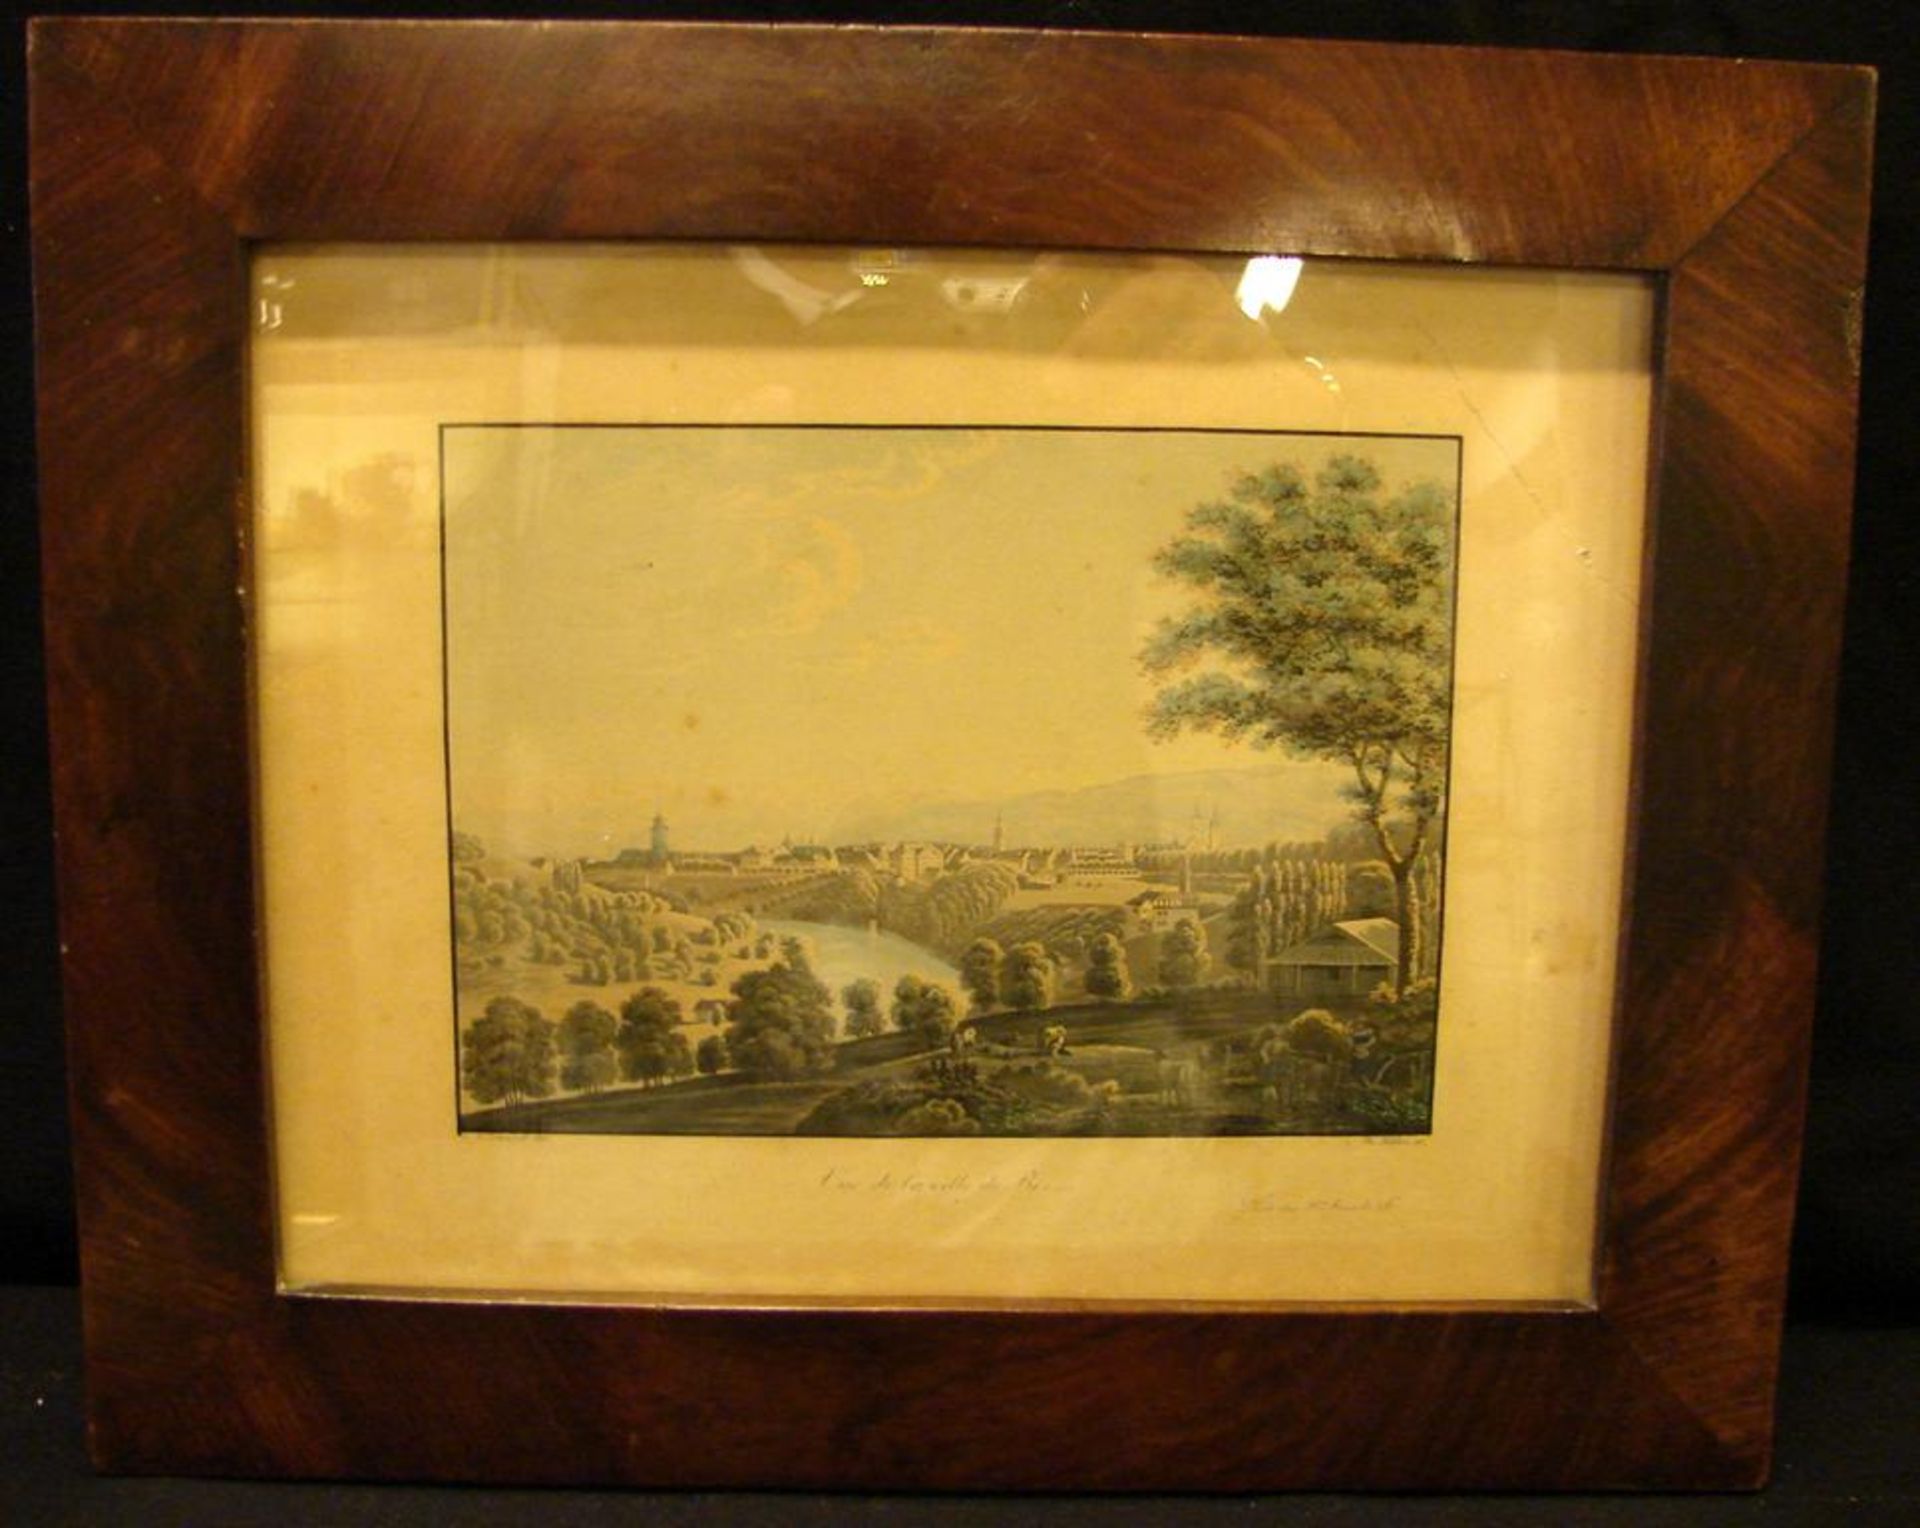 "Ansicht auf Bern", Aquatinta, coloriert, um 1835, ca. 21 x 27 cm- - -22.00 % buyer's premium on the